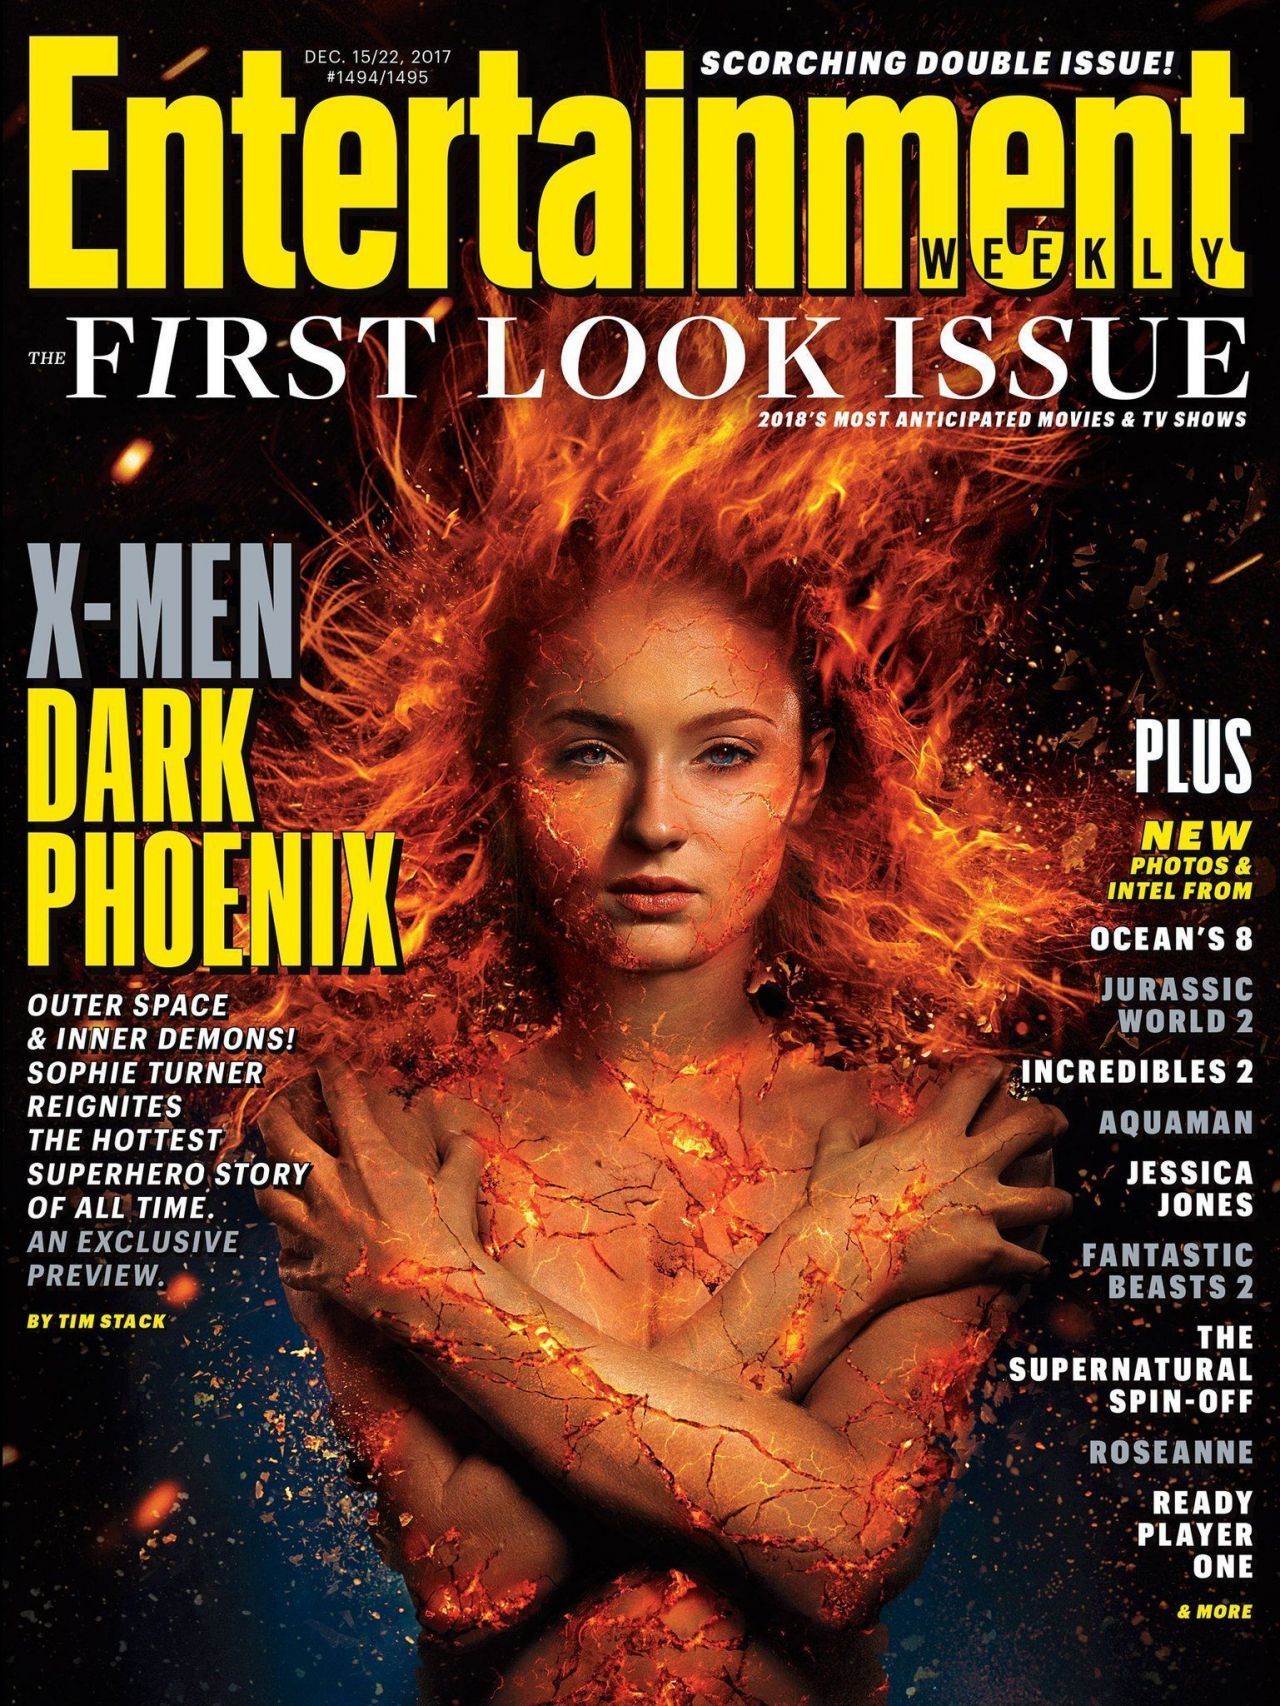 X-Men Dark Phoenix : les 1ères photos, le synopsis + 1 énorme news